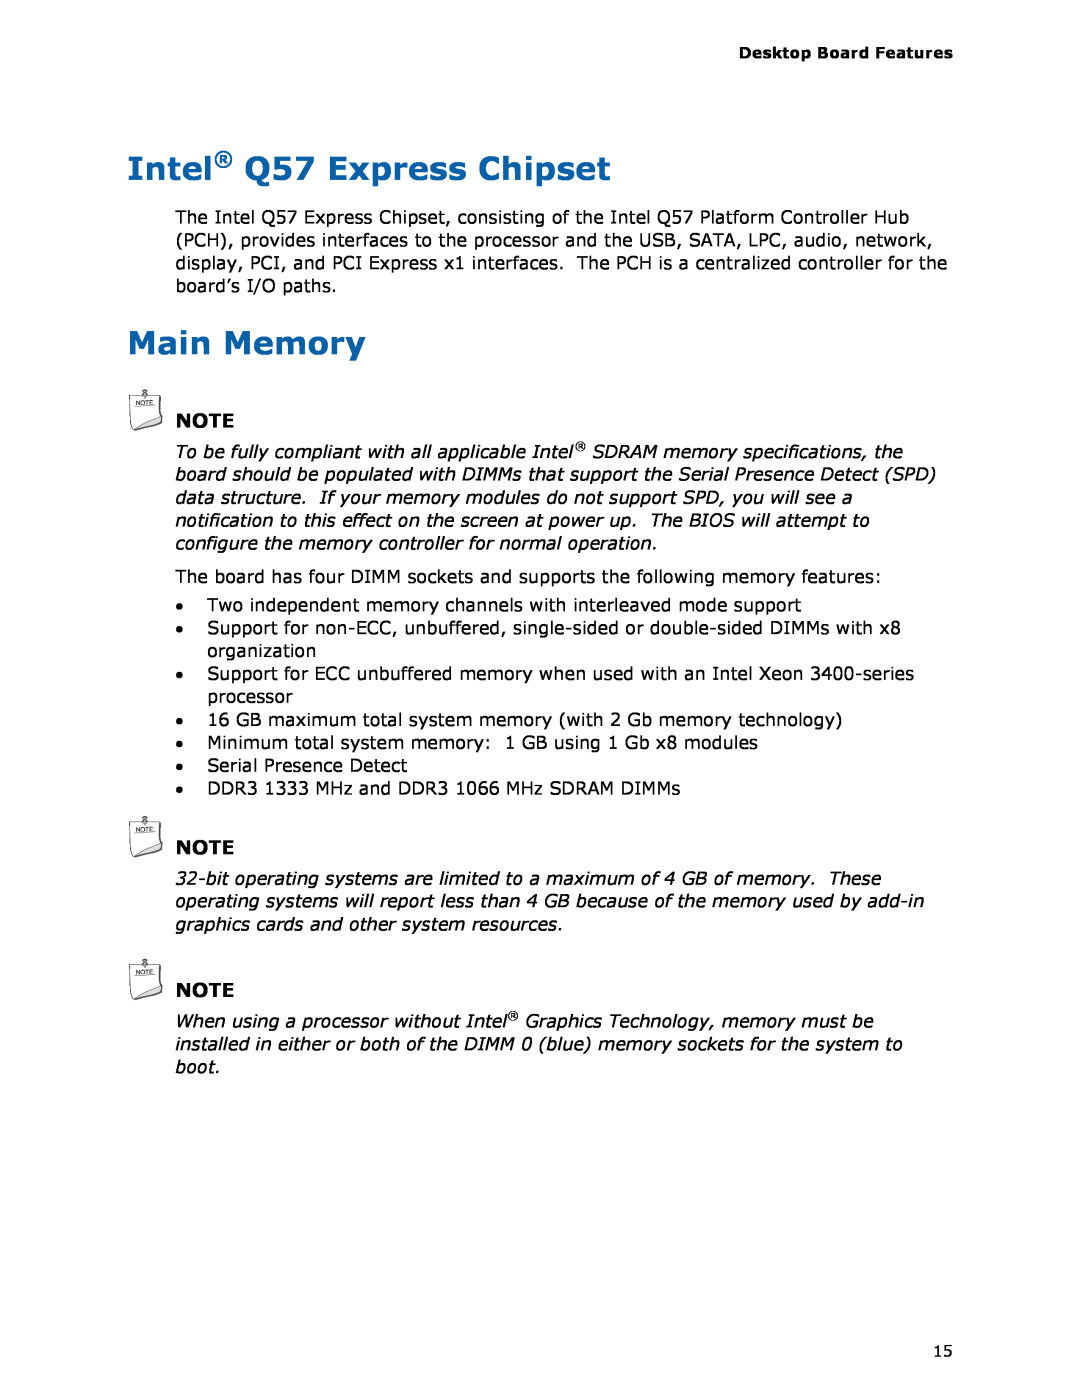 Intel DQ57TM manual Intel Q57 Express Chipset, Main Memory 